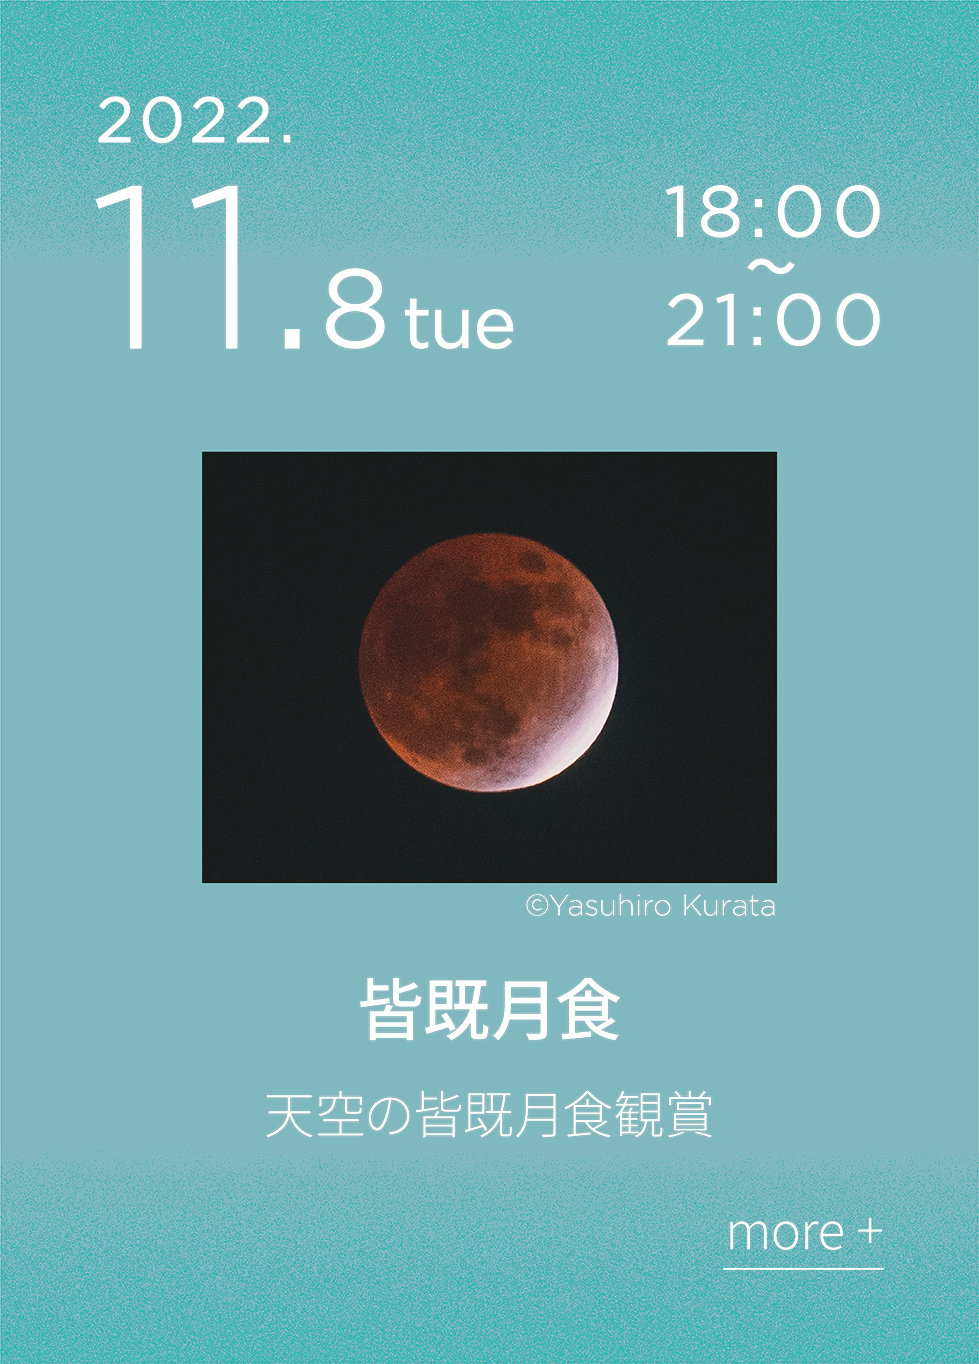 2022.11.11 tue 16:00〜21:00 天空の皆既月食観賞